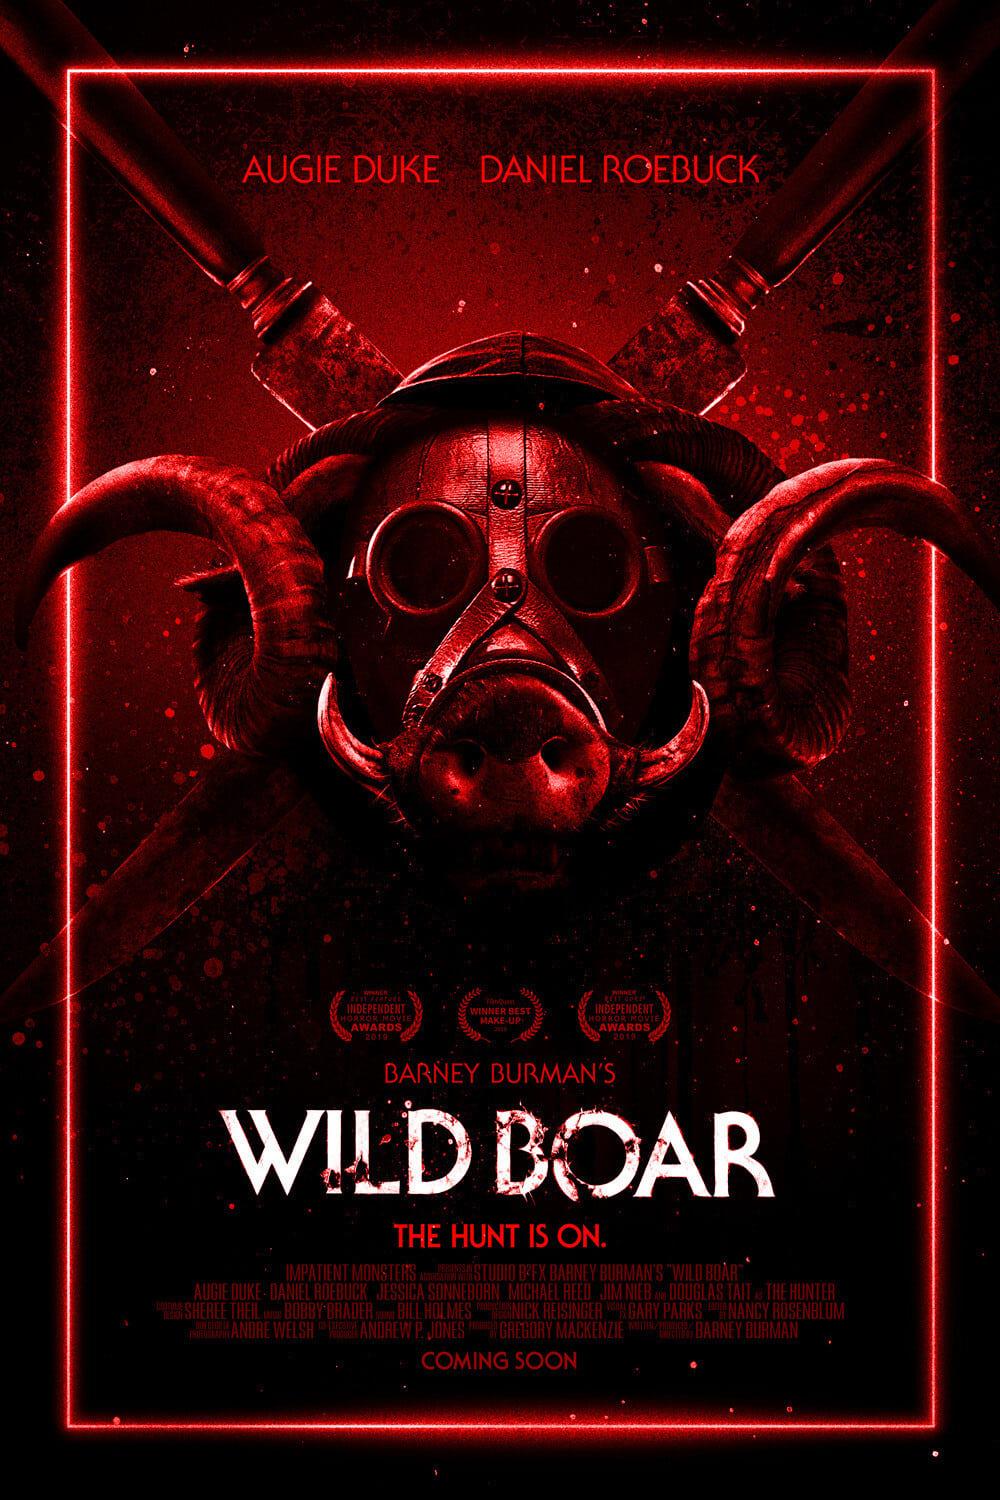 Wild Boar poster